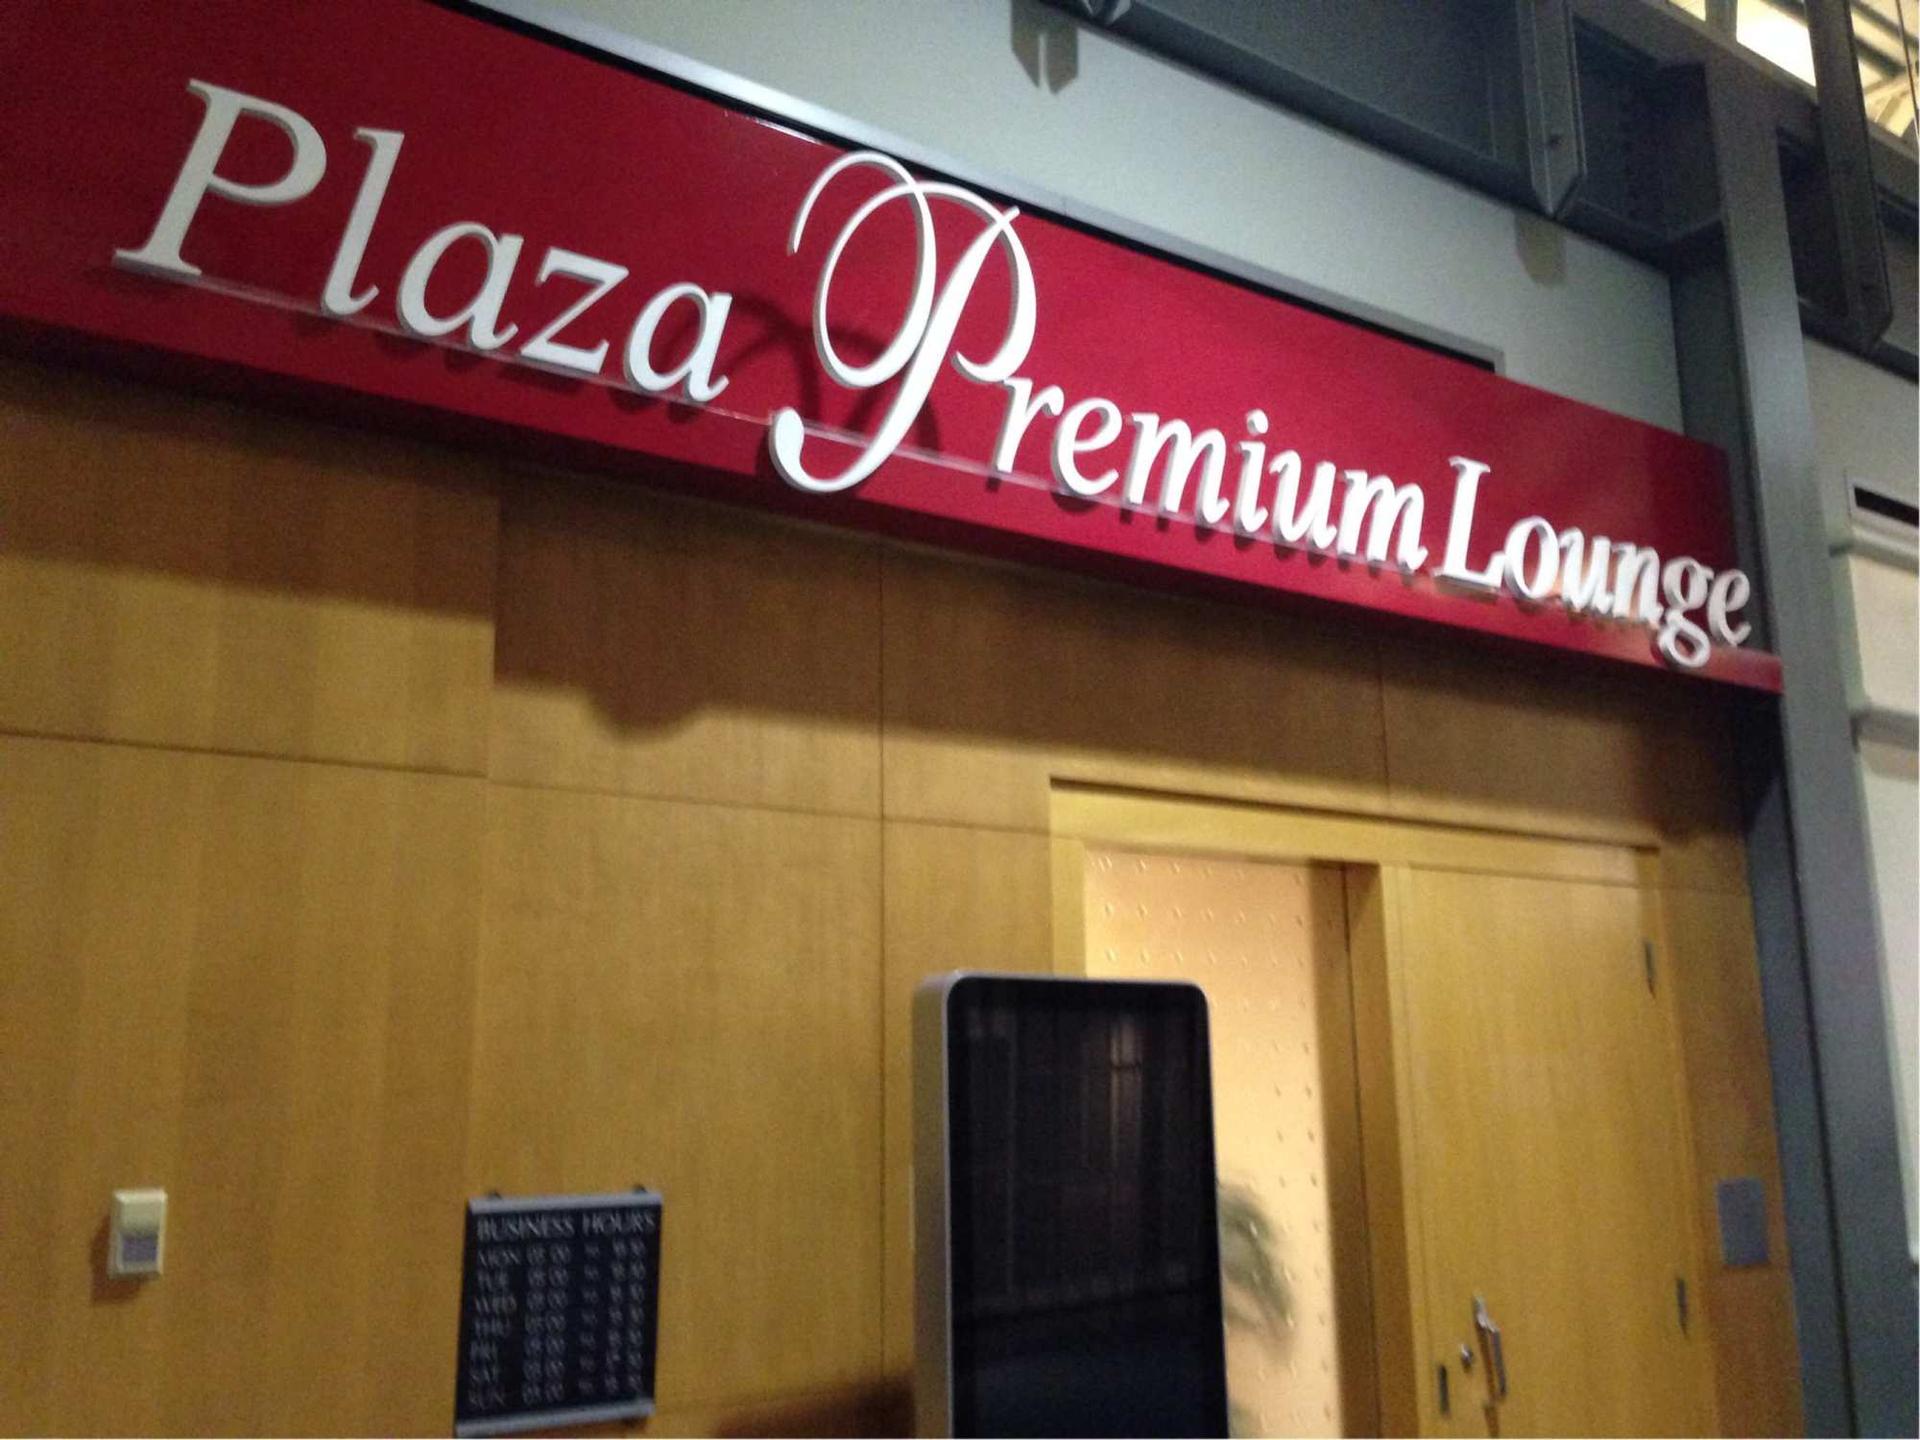 Plaza Premium Lounge image 19 of 55